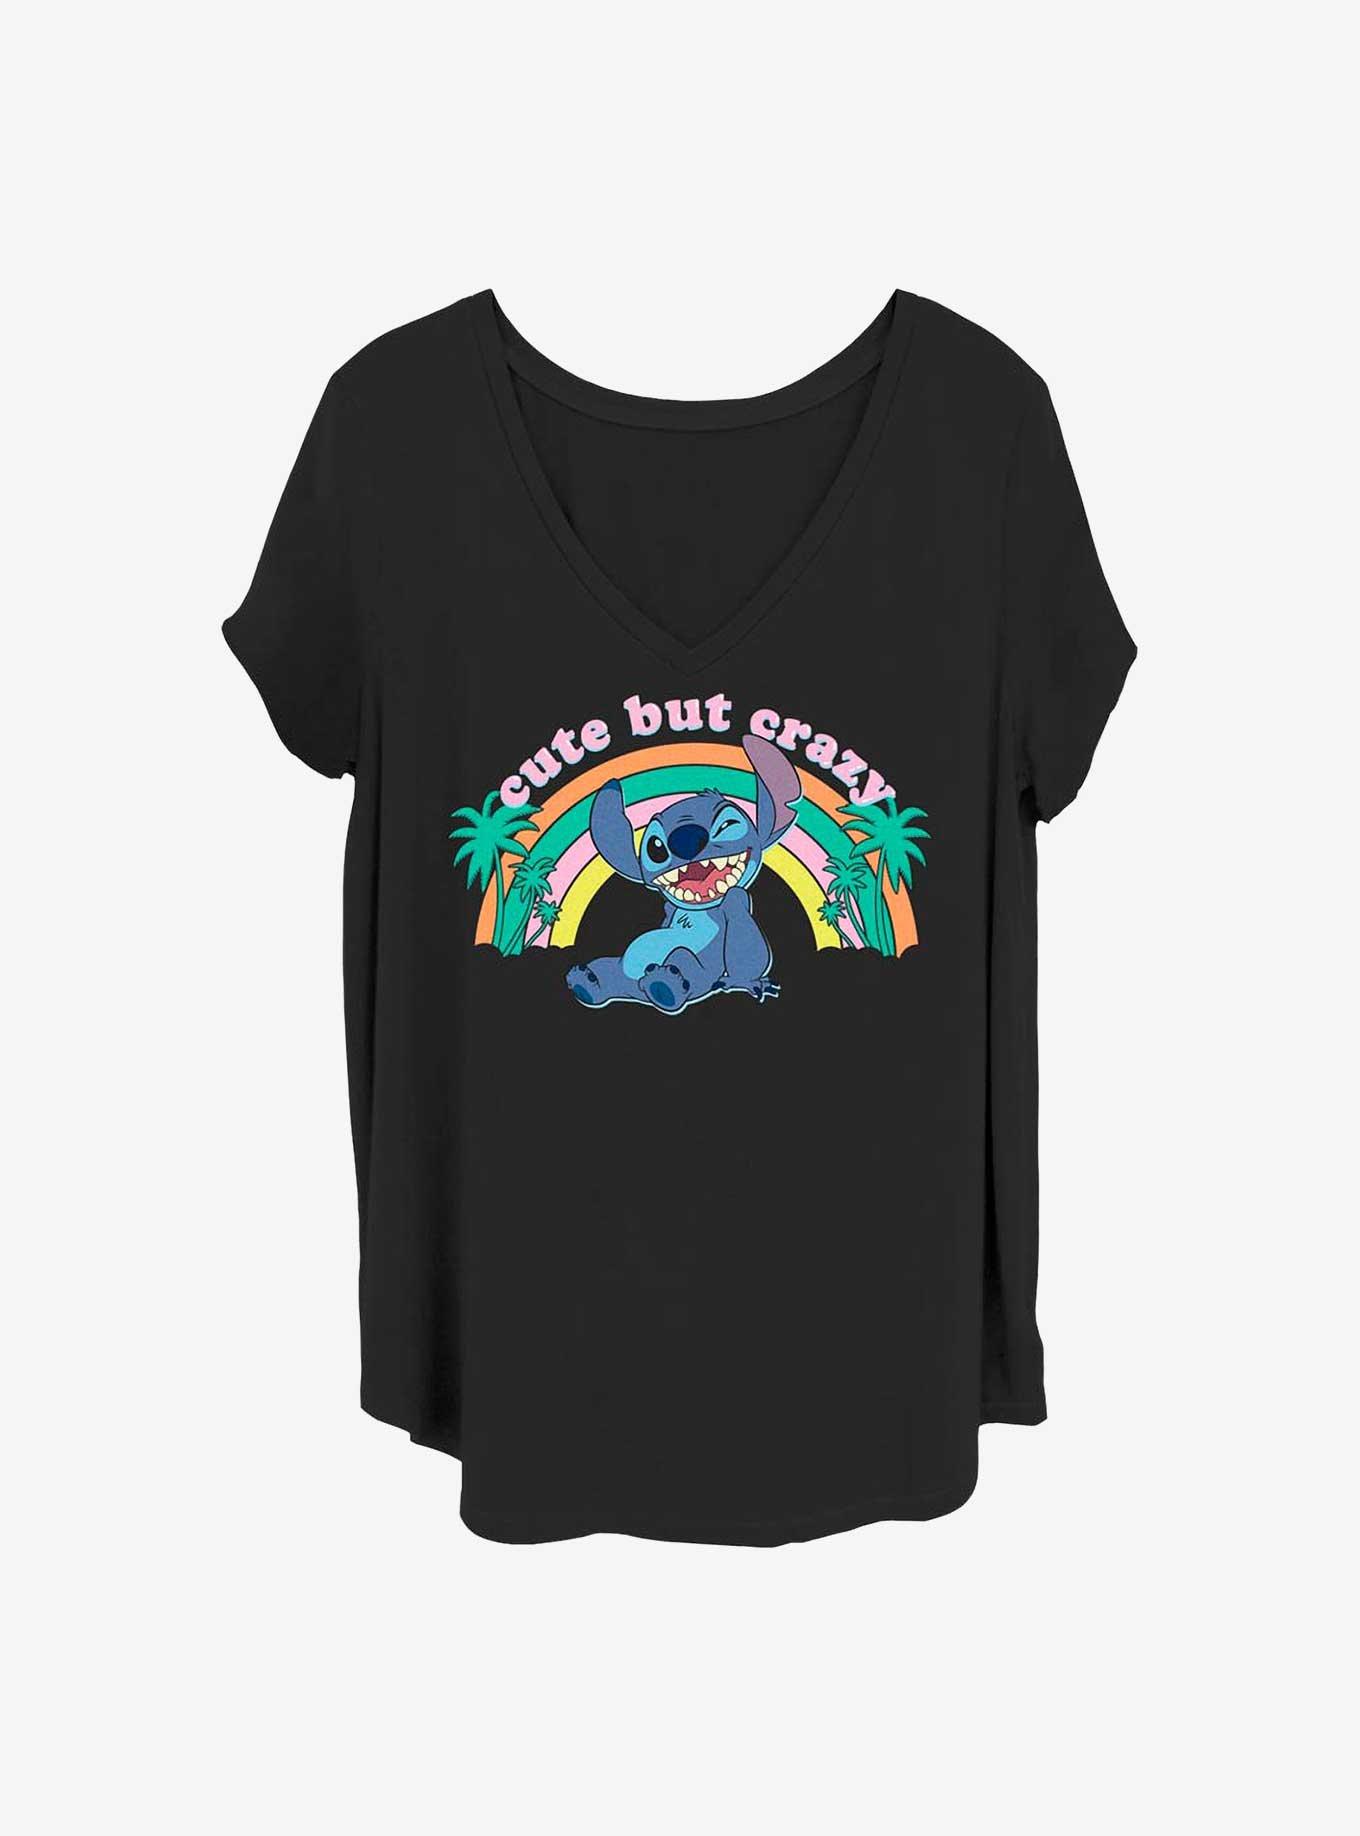 Disney Lilo & Stitch Cute But Crazy Girls T-Shirt Plus